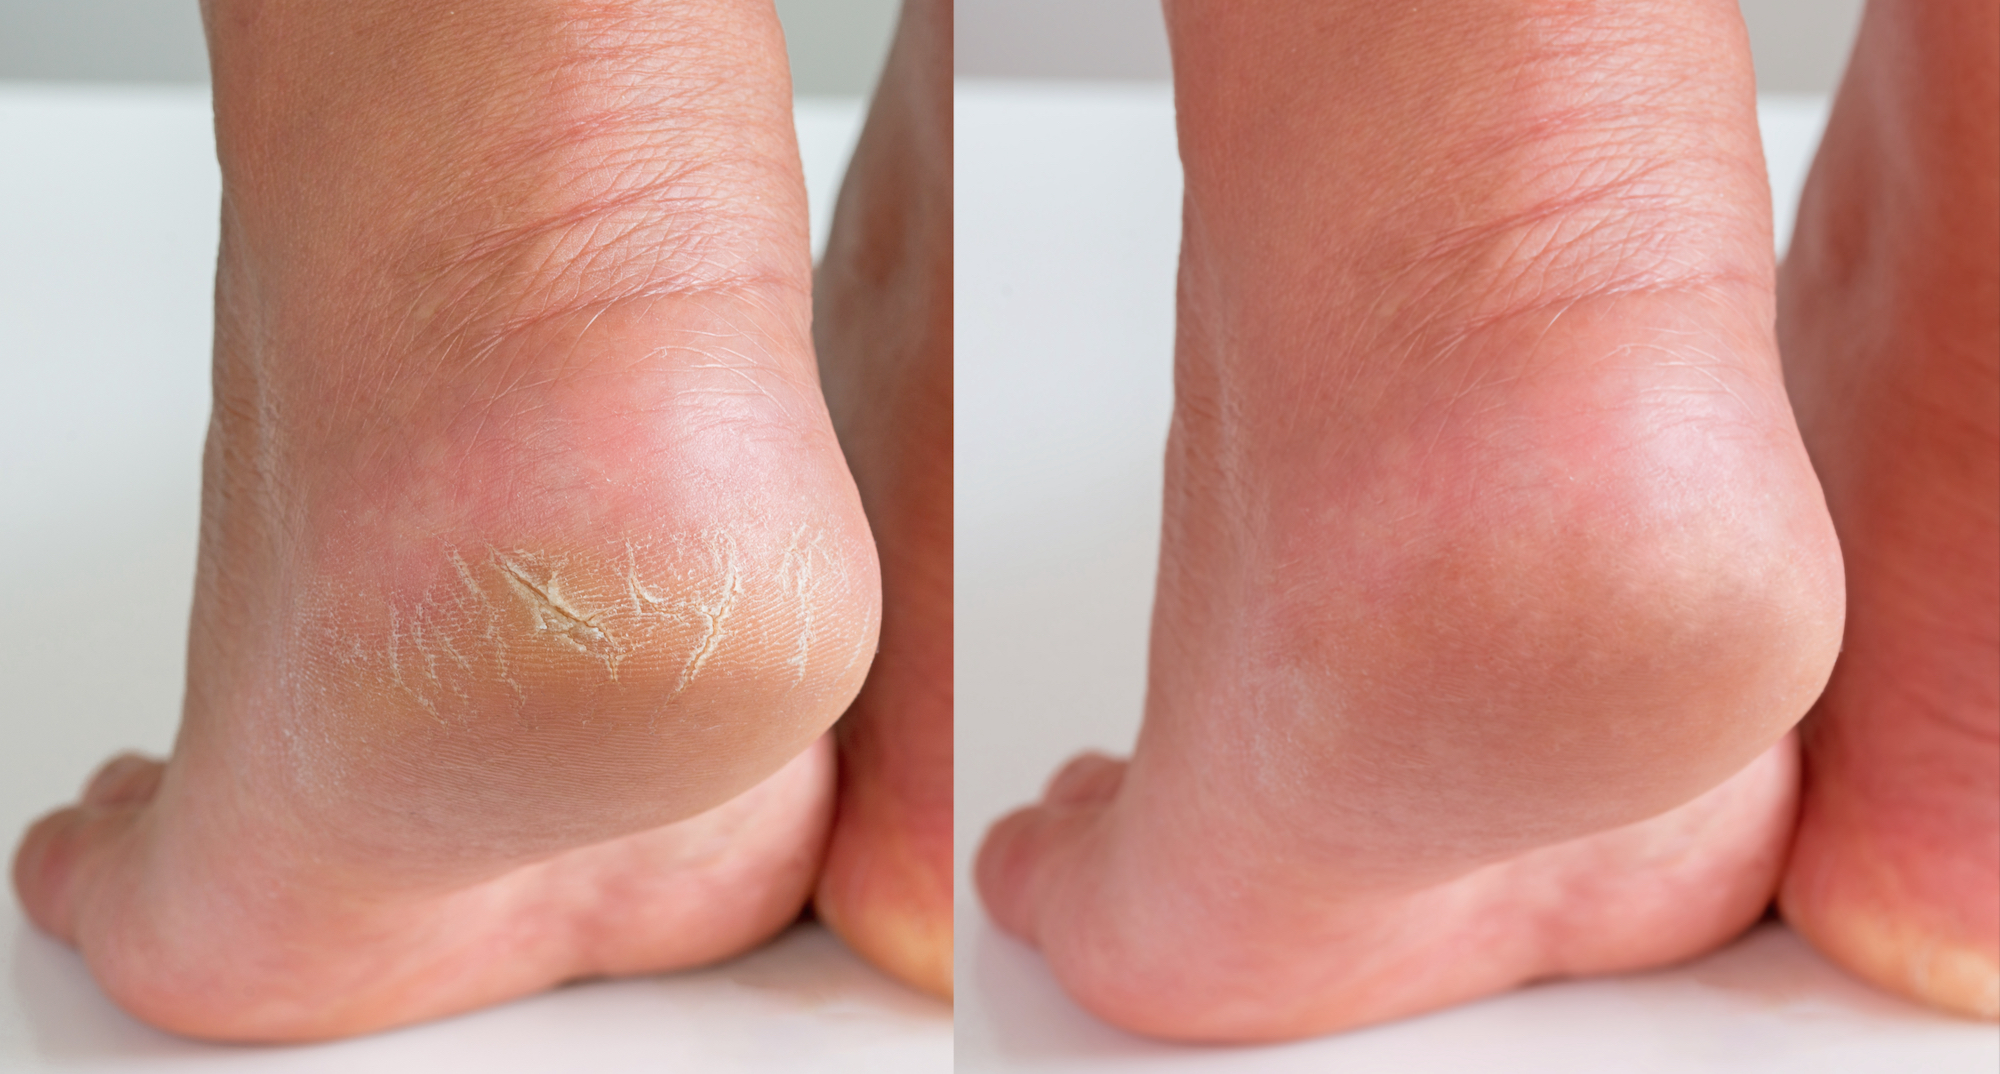 AroMine Foot Repair Cream For Cracked Heels & Feet Cleansing- - Price in  India, Buy AroMine Foot Repair Cream For Cracked Heels & Feet Cleansing-  Online In India, Reviews, Ratings & Features |